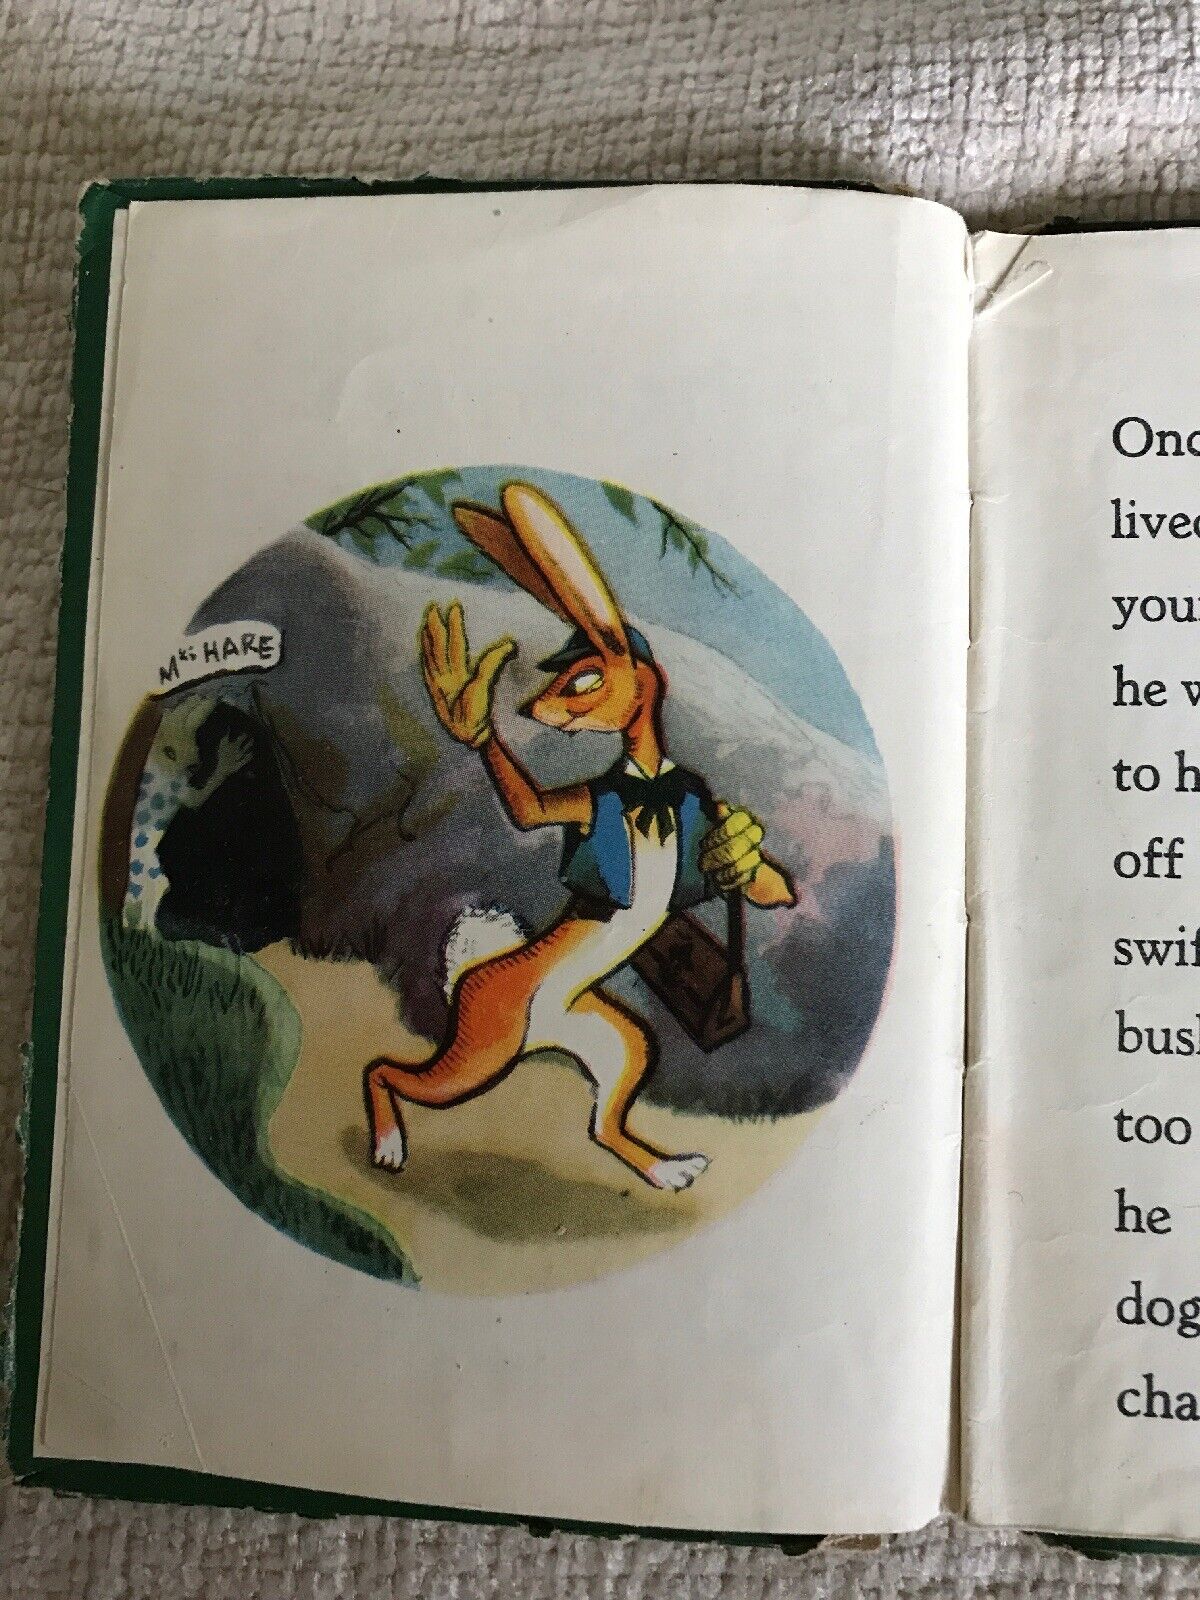 1940’s Hubert The Hare (Peekobook) Patience Powell(Perry Colour Books) Honeyburn Books (UK)